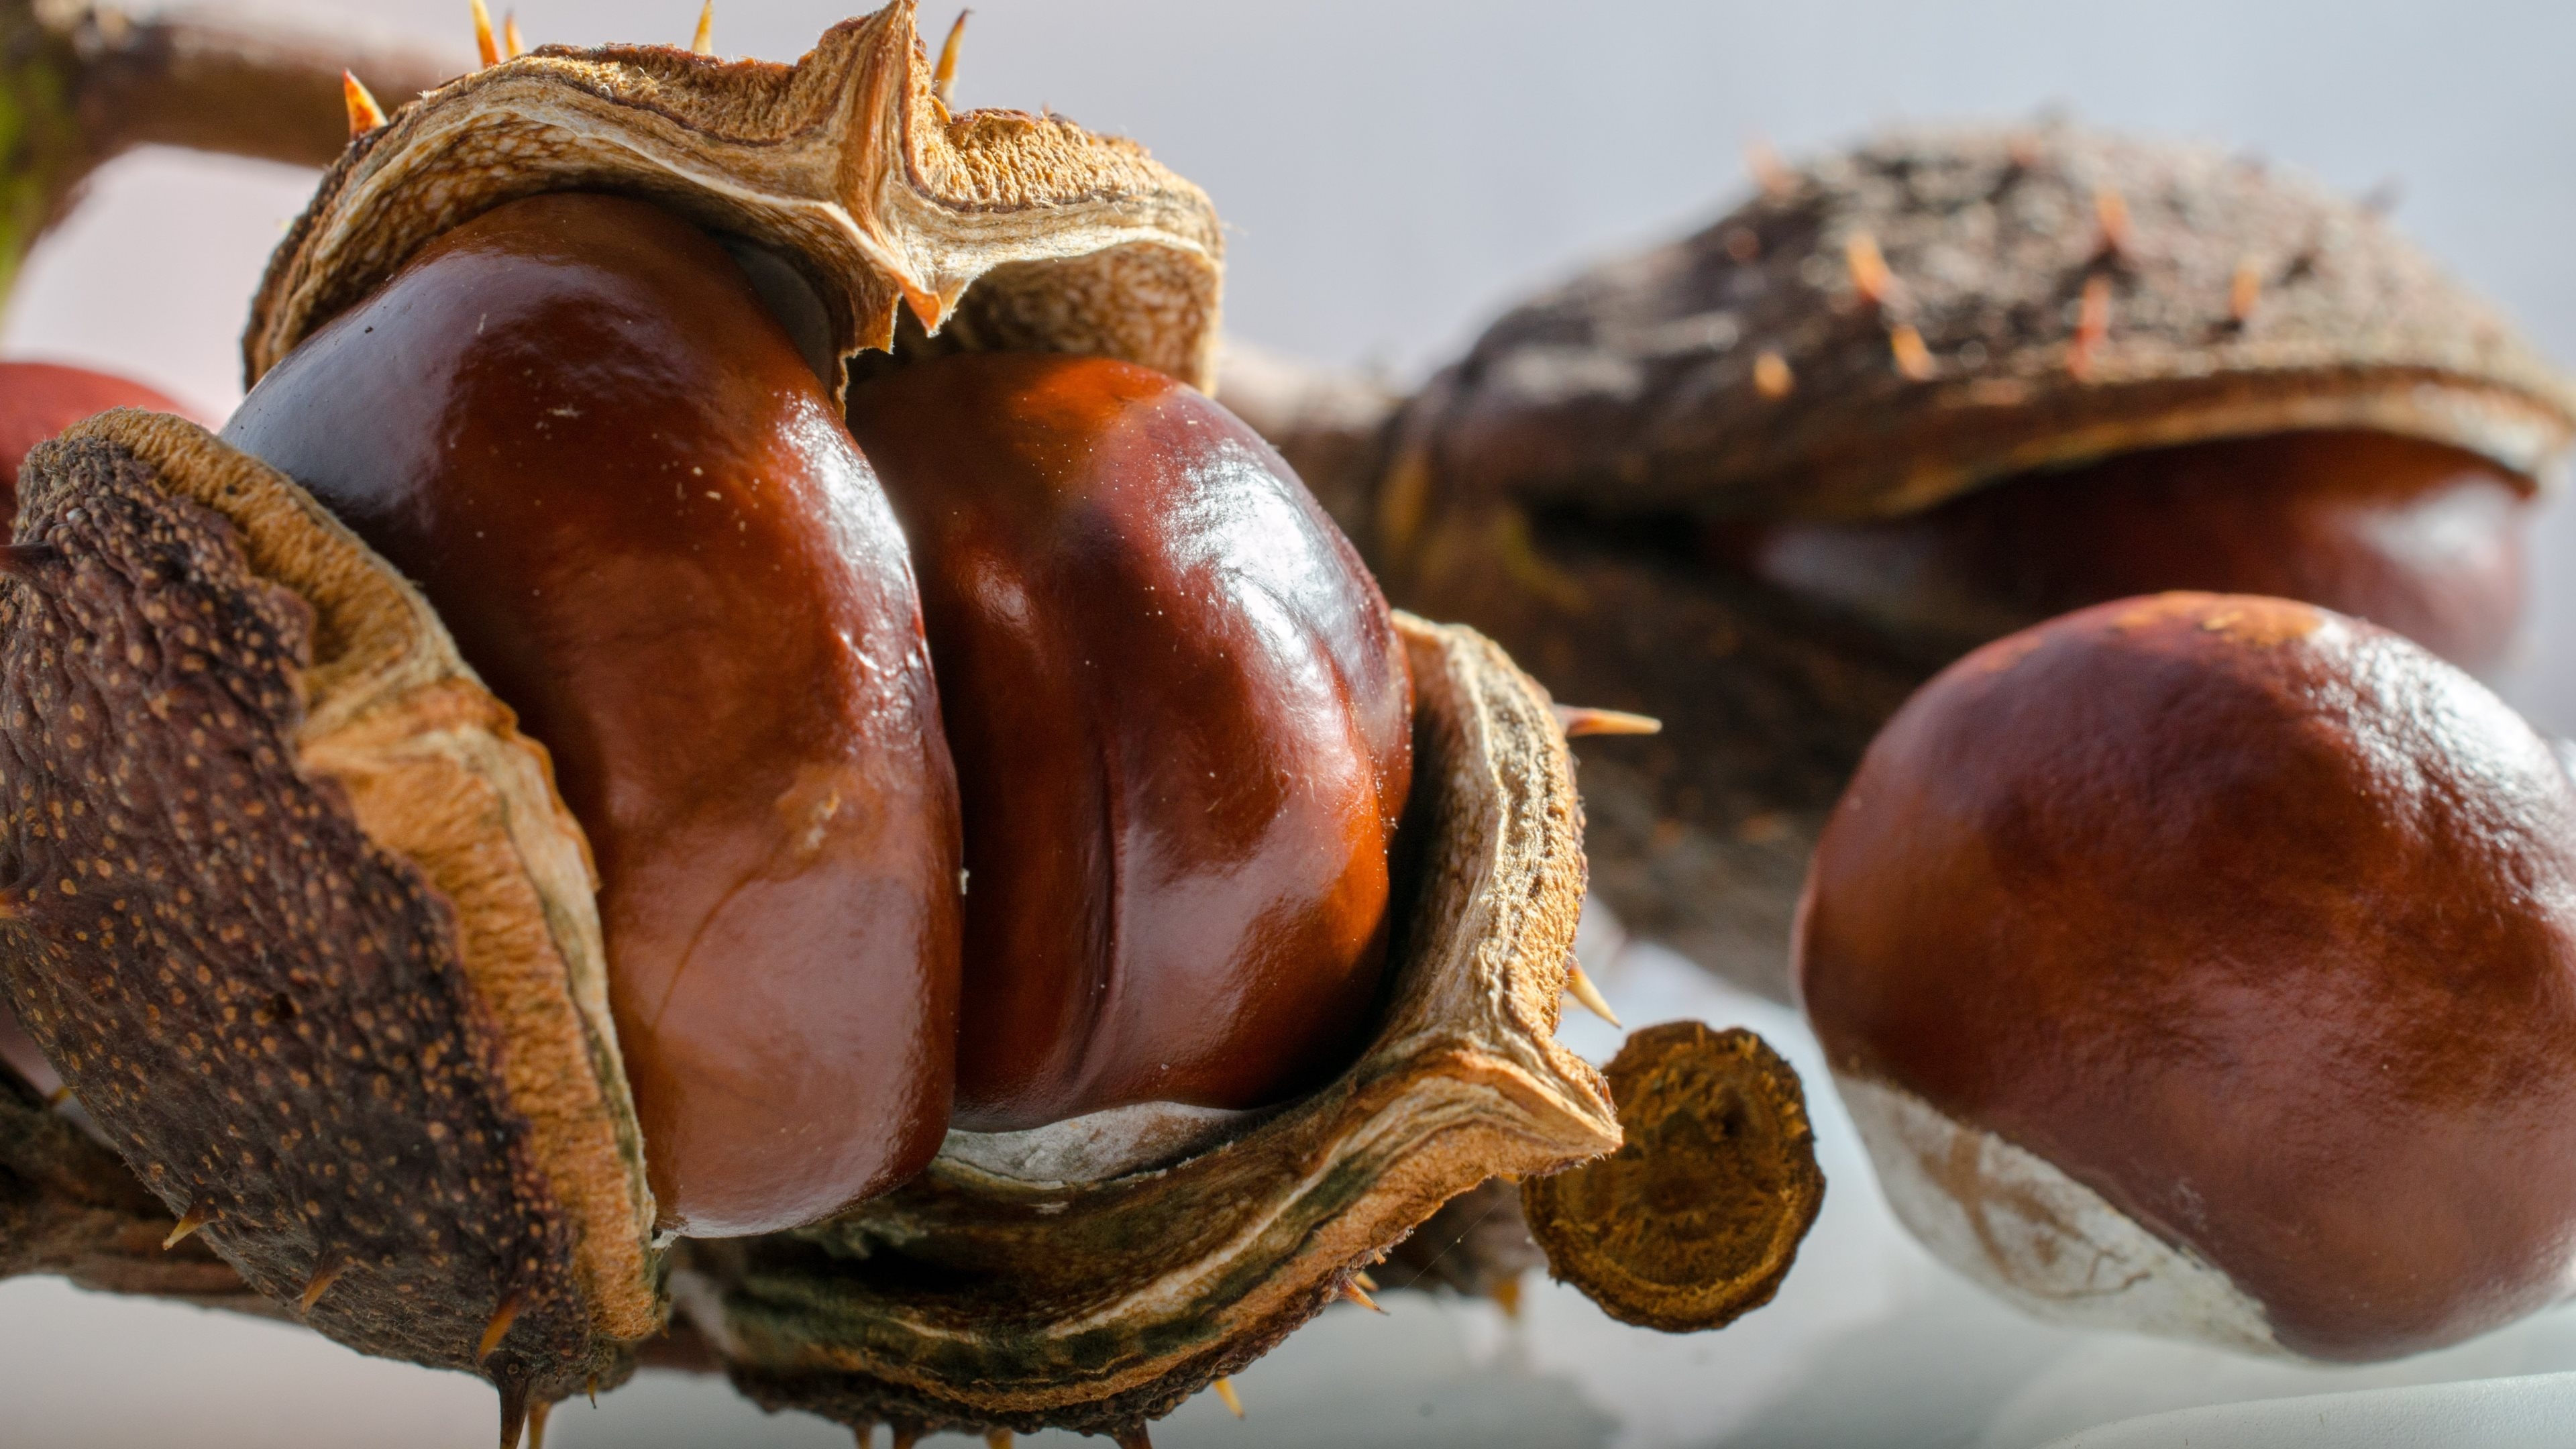 Chestnuts in their home, HD wallpaper, Natural beauty, Seasonal charm, 3840x2160 4K Desktop